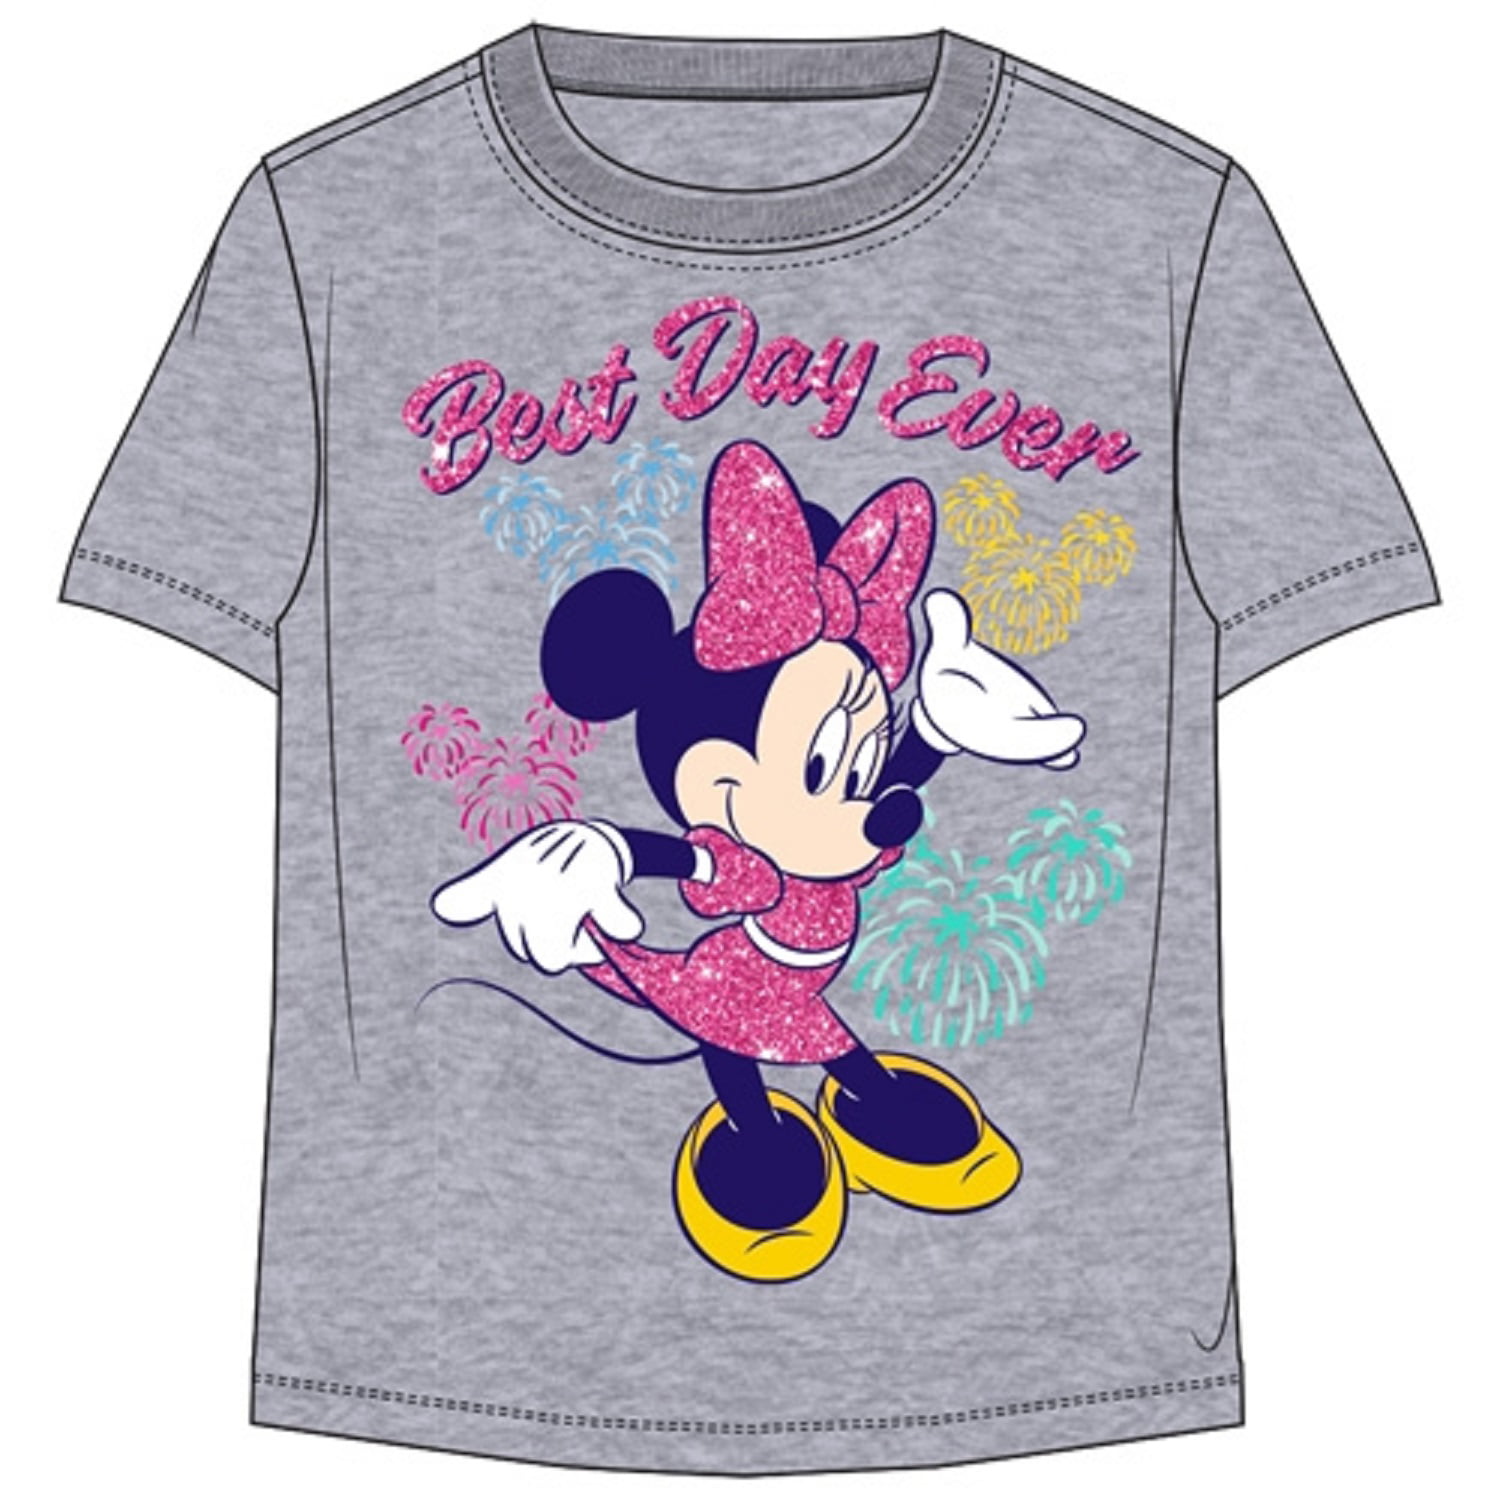 SaveMax Disney Toddler Girls T Shirt Minnie Mouse Best